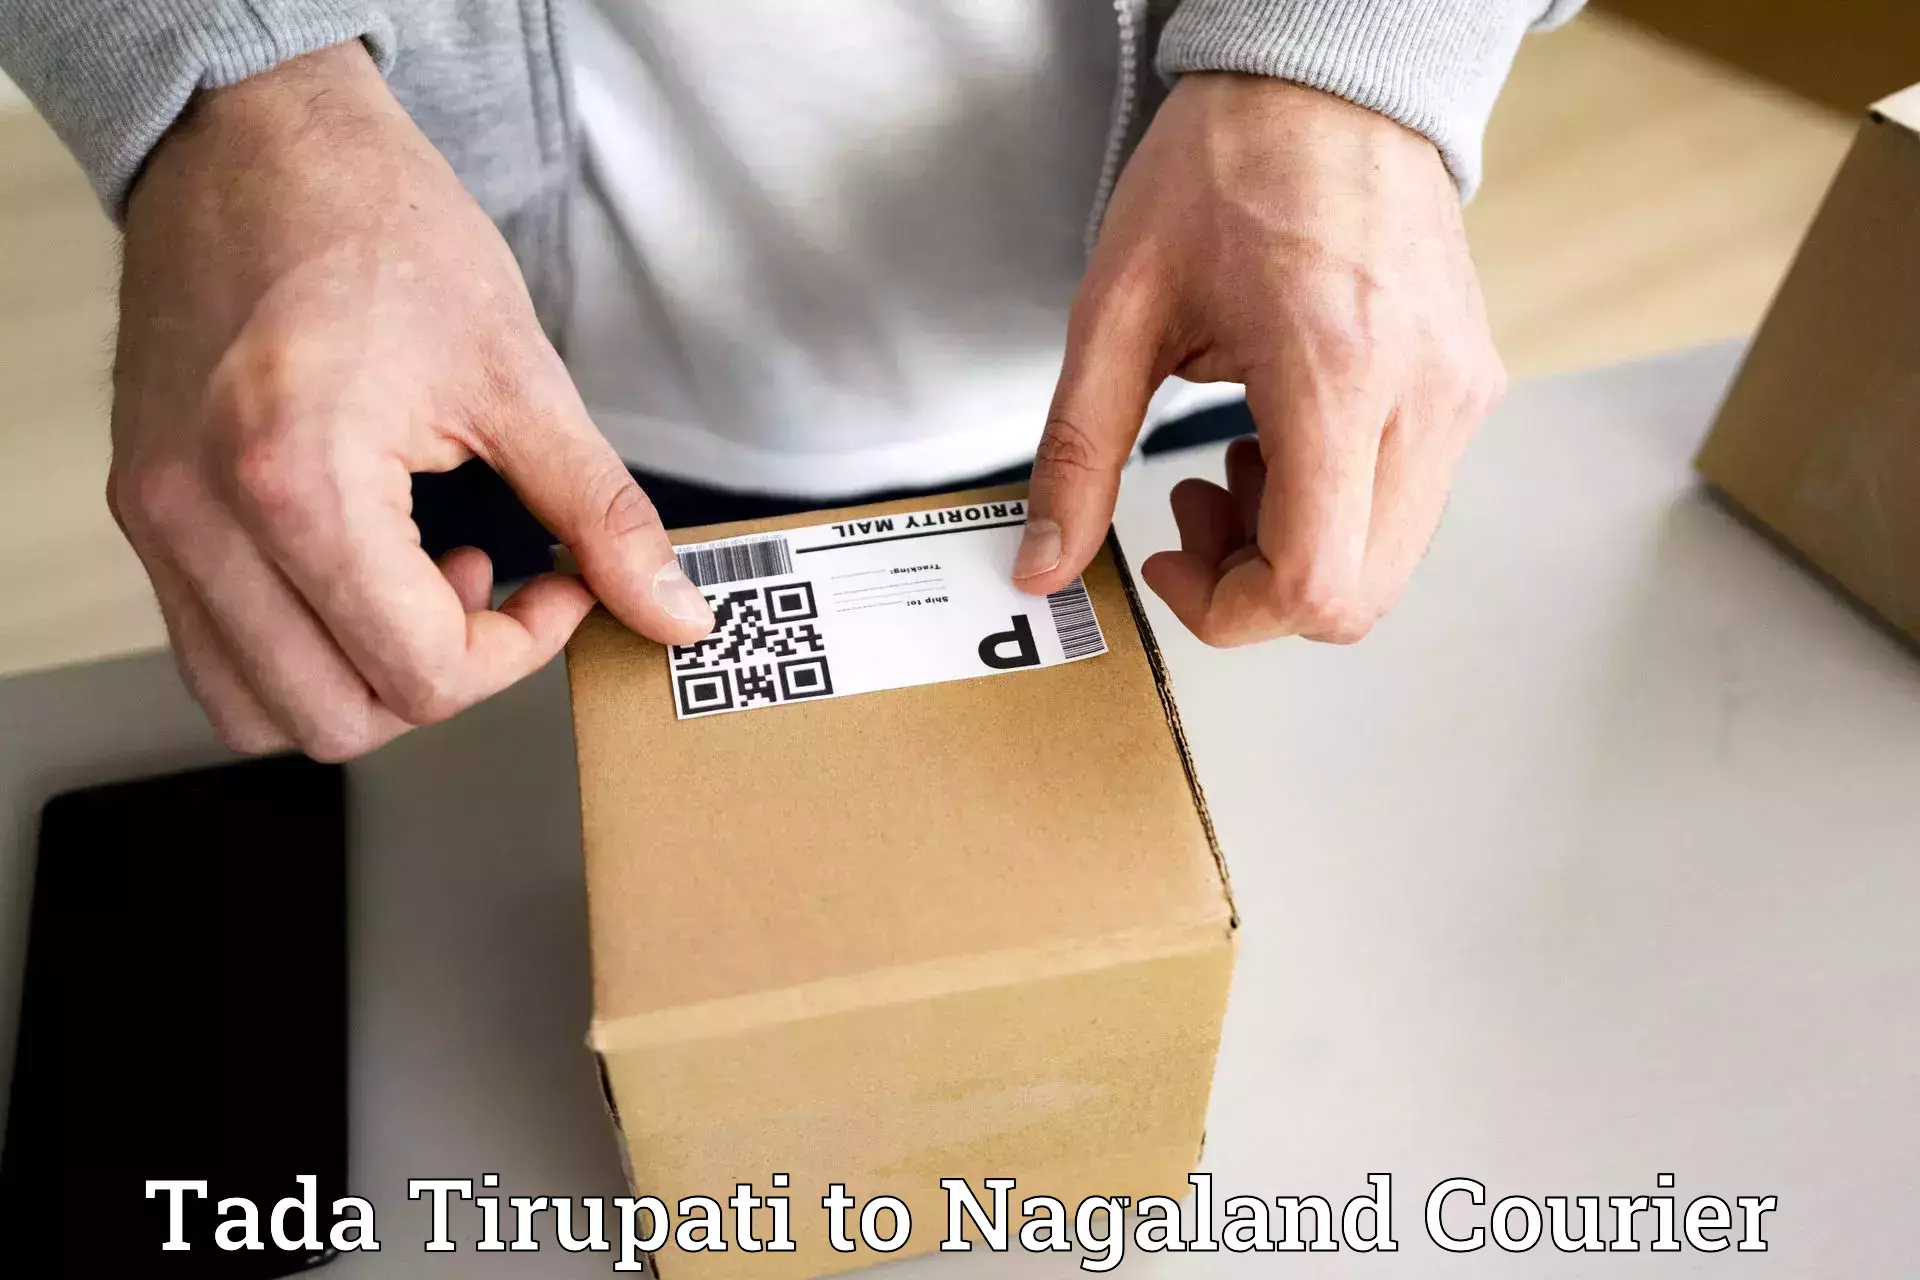 Courier app Tada Tirupati to Tuensang